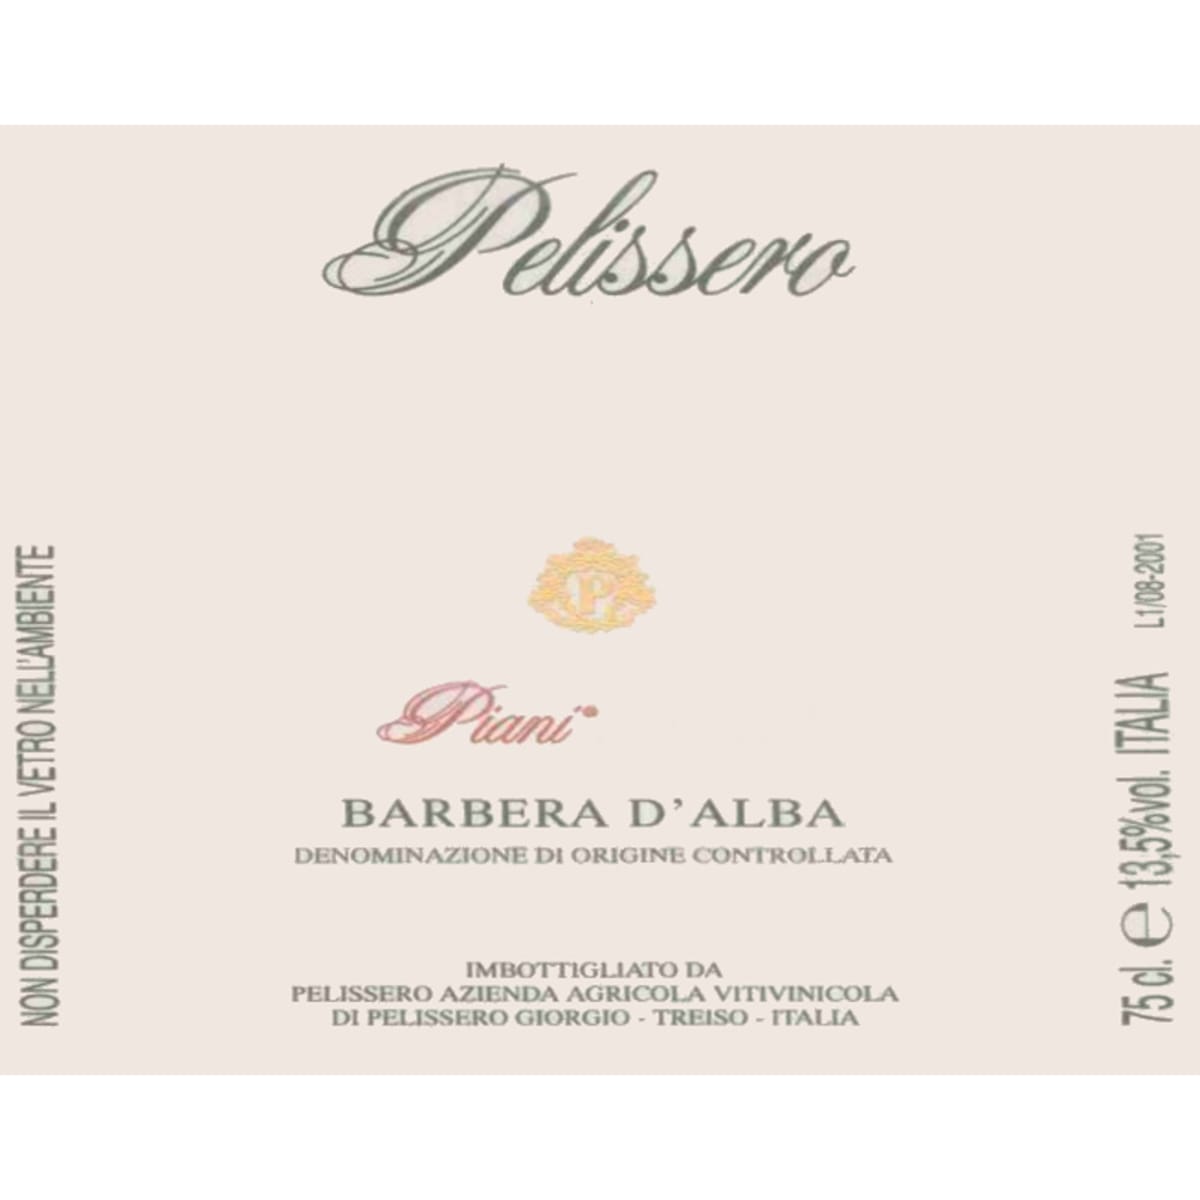 Pelissero Barbera d'Alba Piani 2007 Front Label